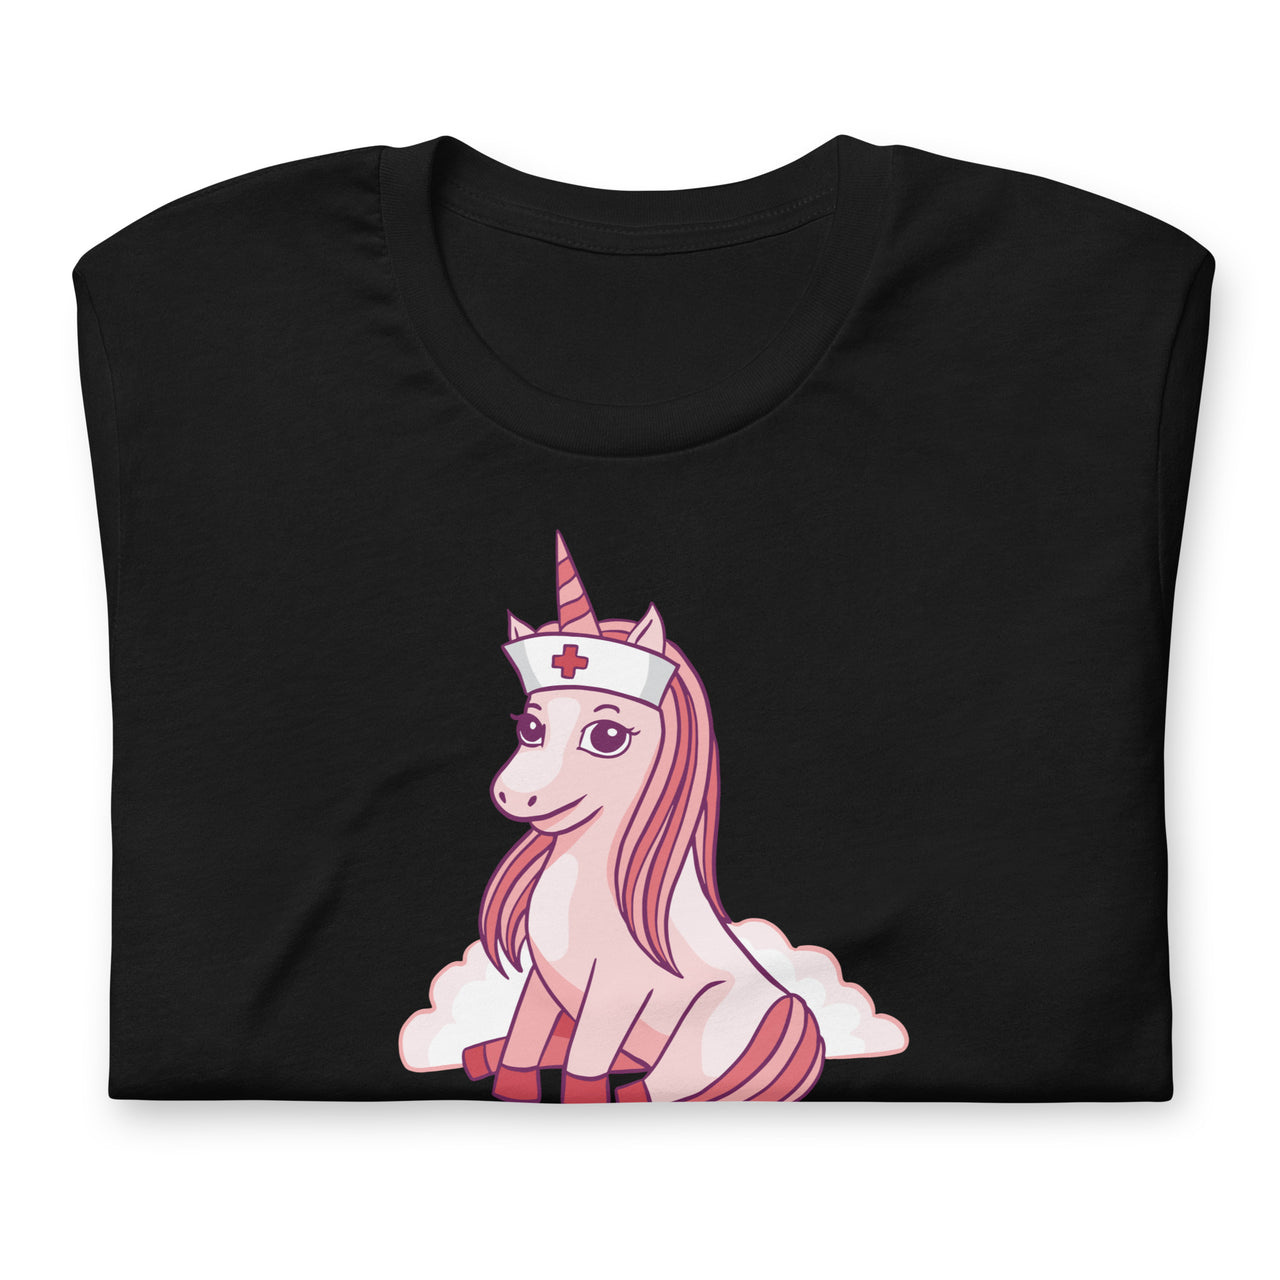 Nurse Unicorn T-Shirt